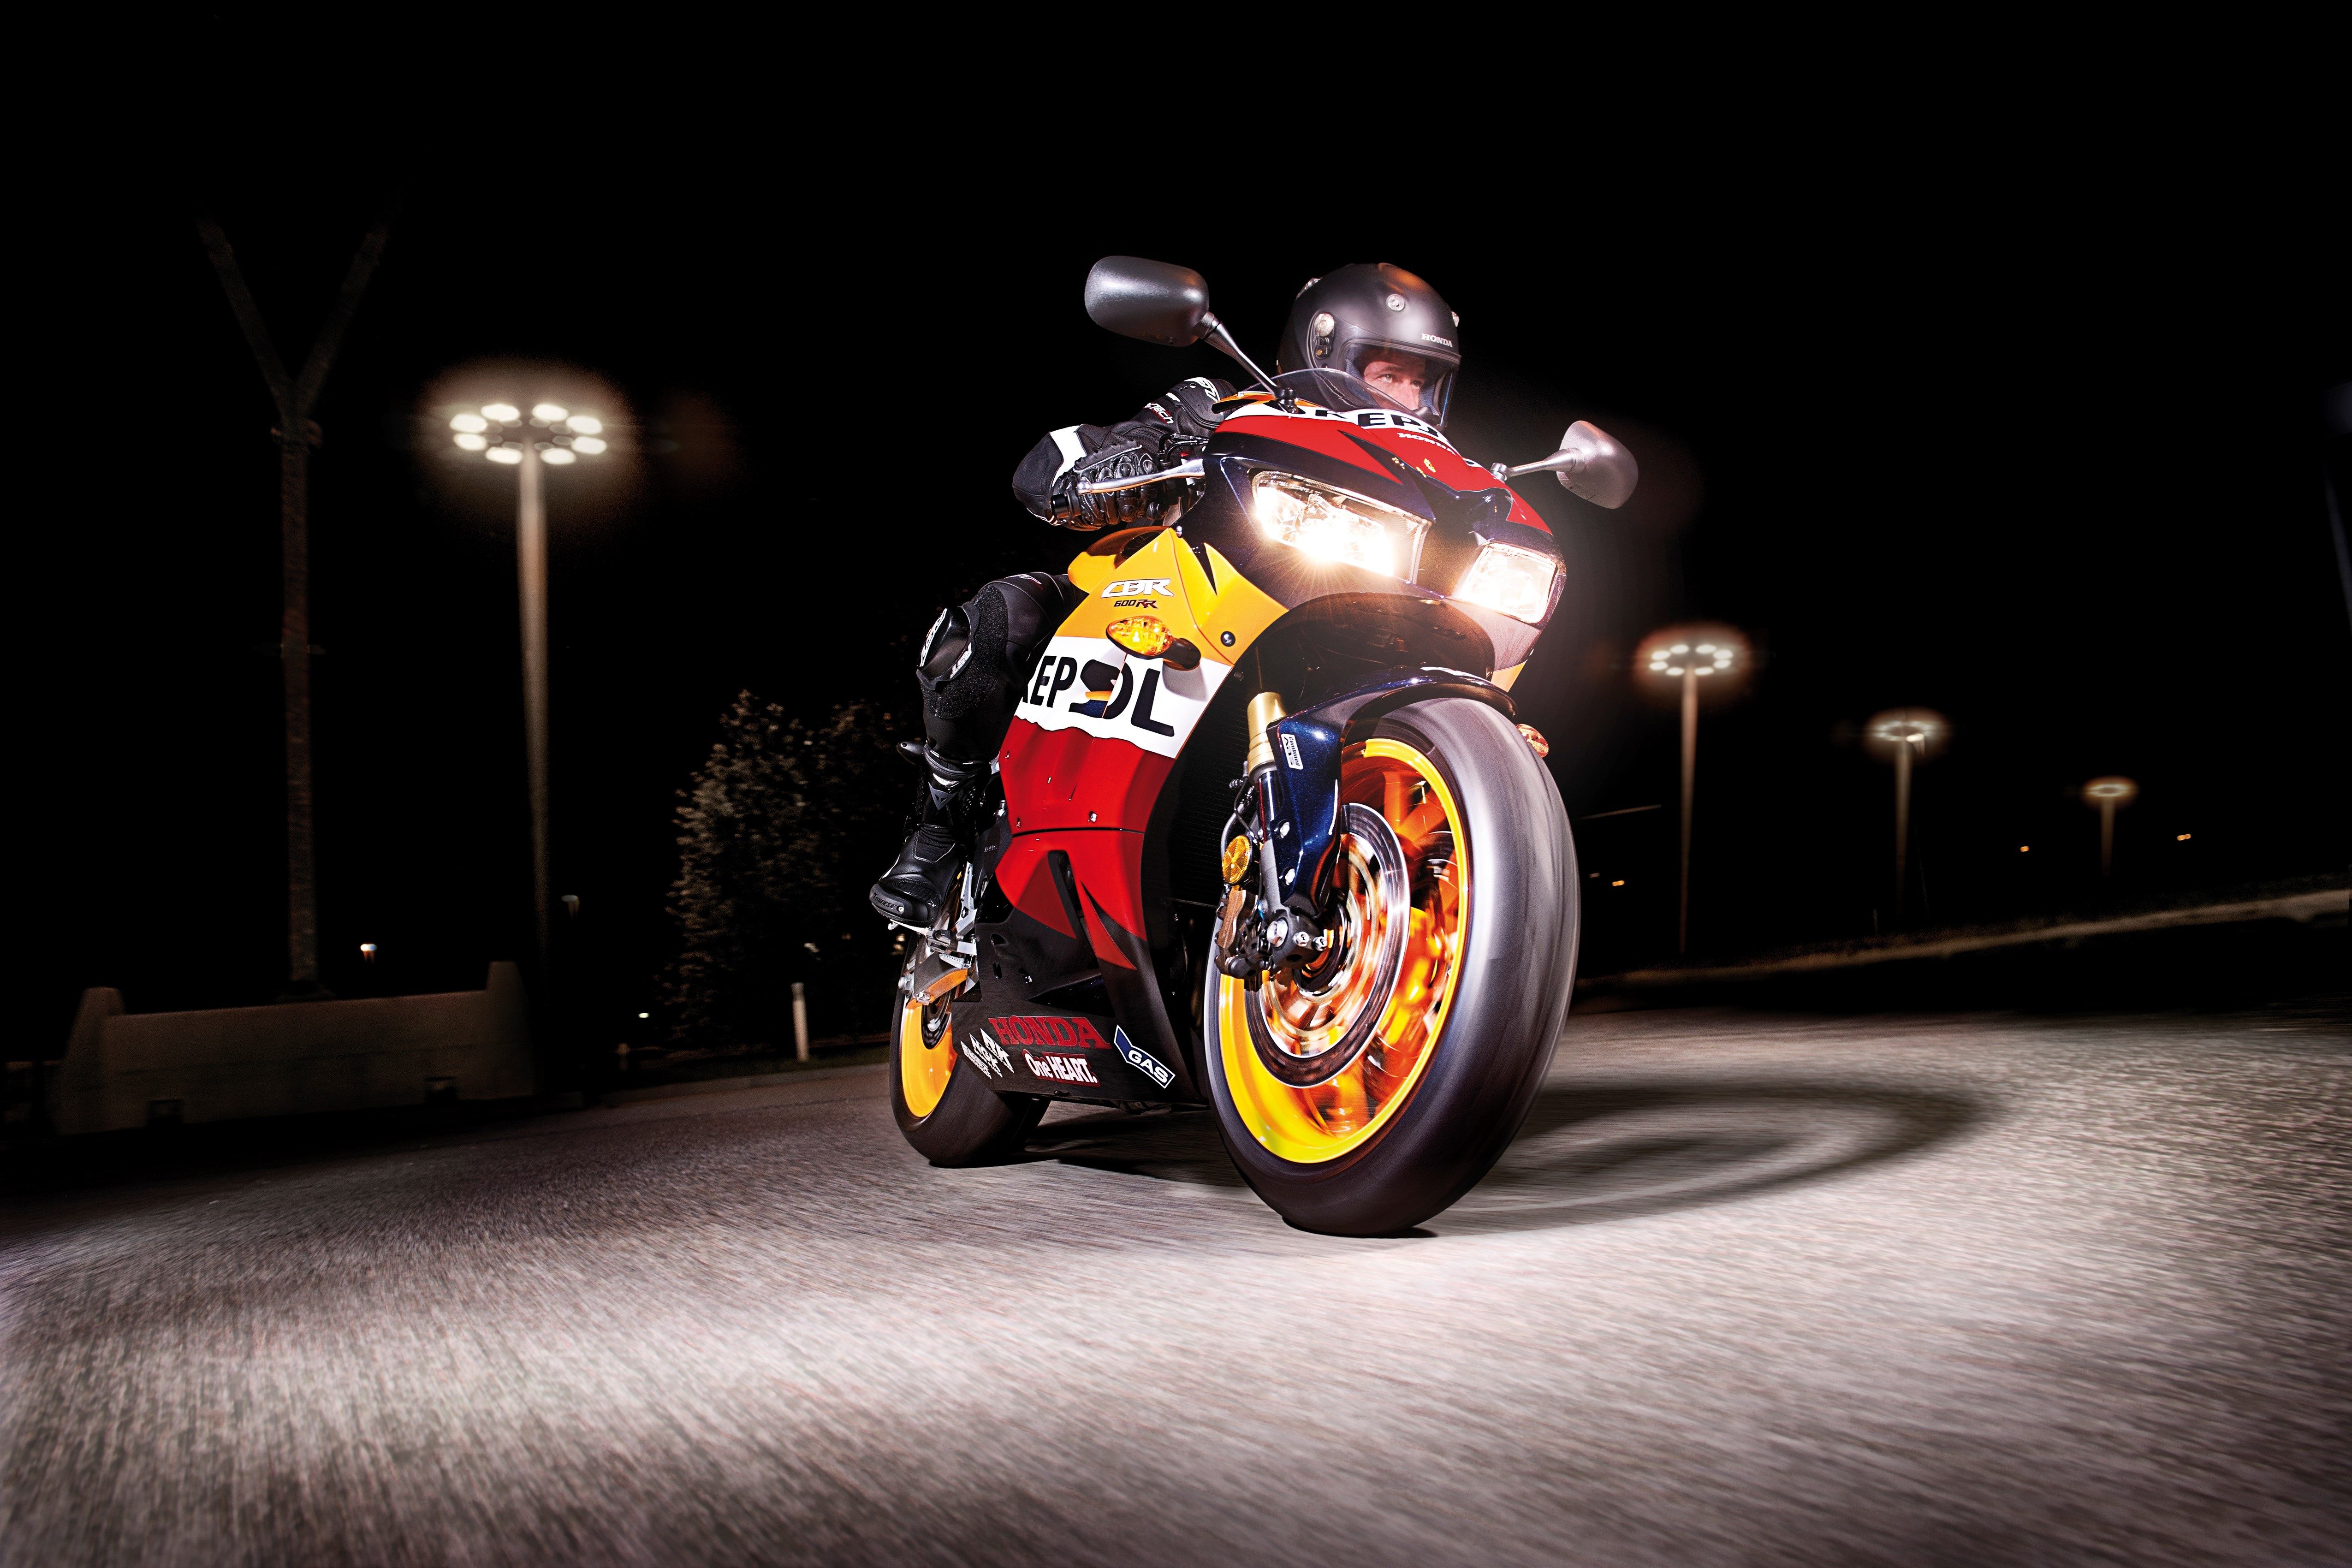 Honda CBR600RR riding shot